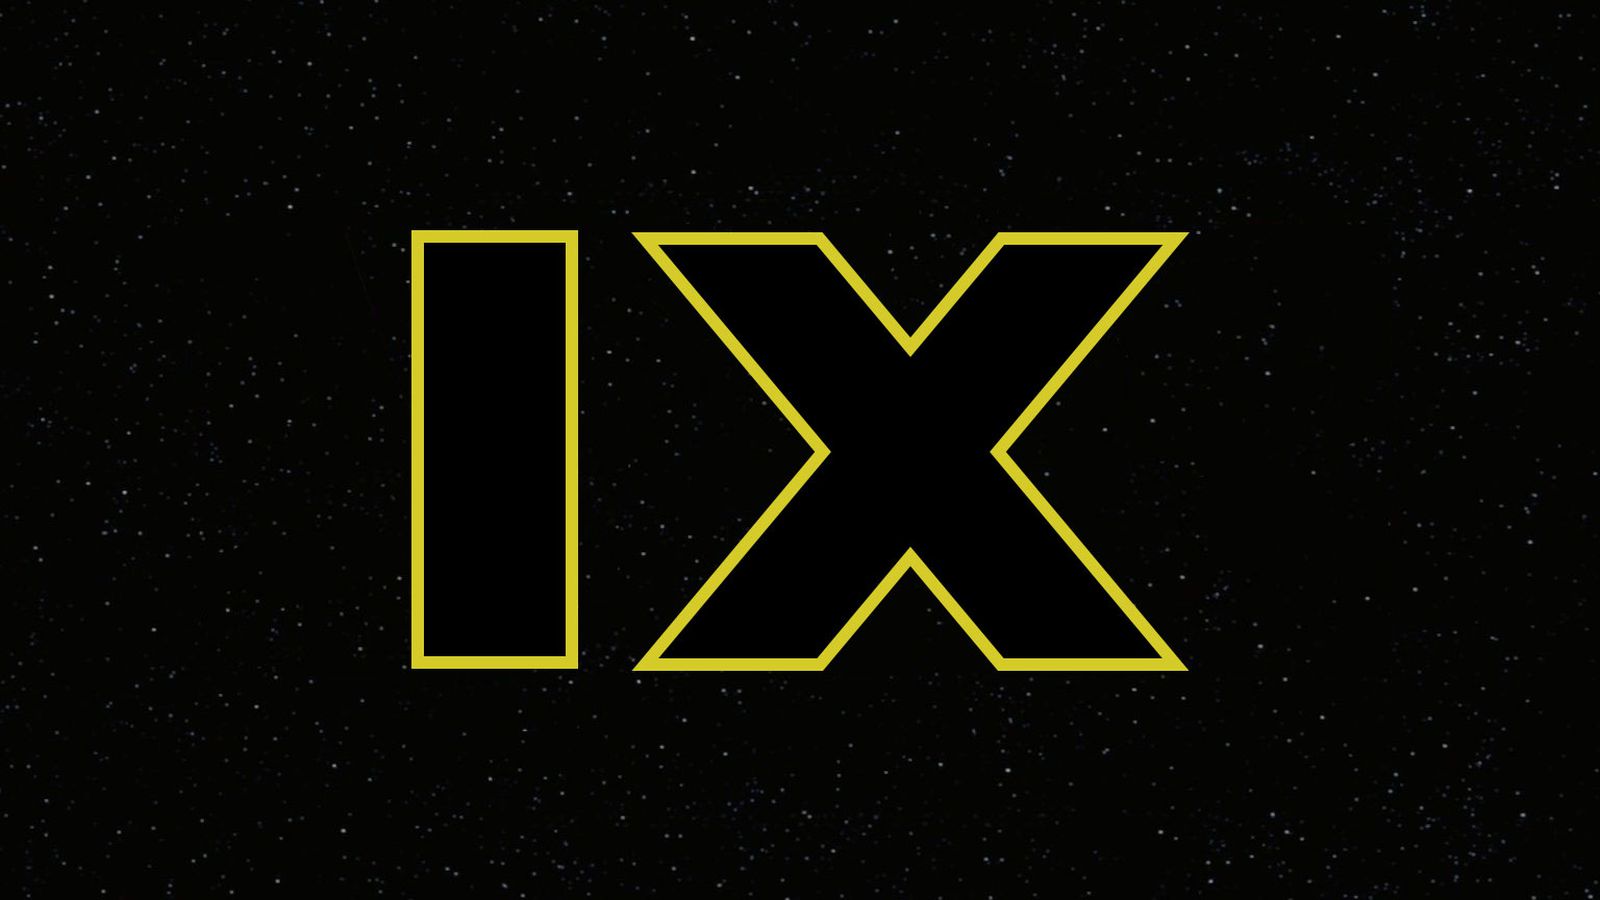 New Star Wars Episode IX Set Images Of Finn Poe Chewbacca